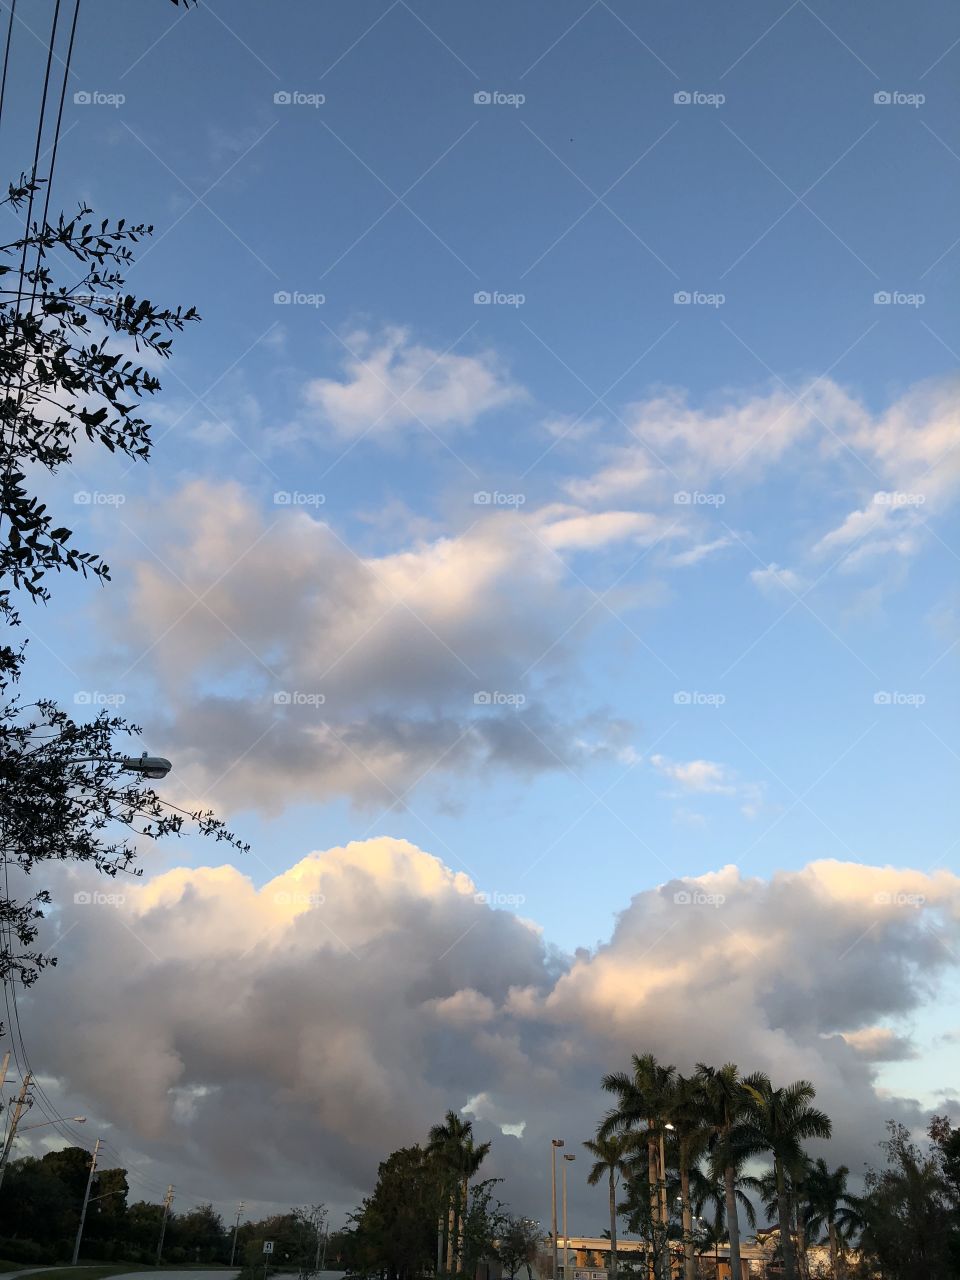 Cloud, sky, sunset, tree, outdoors